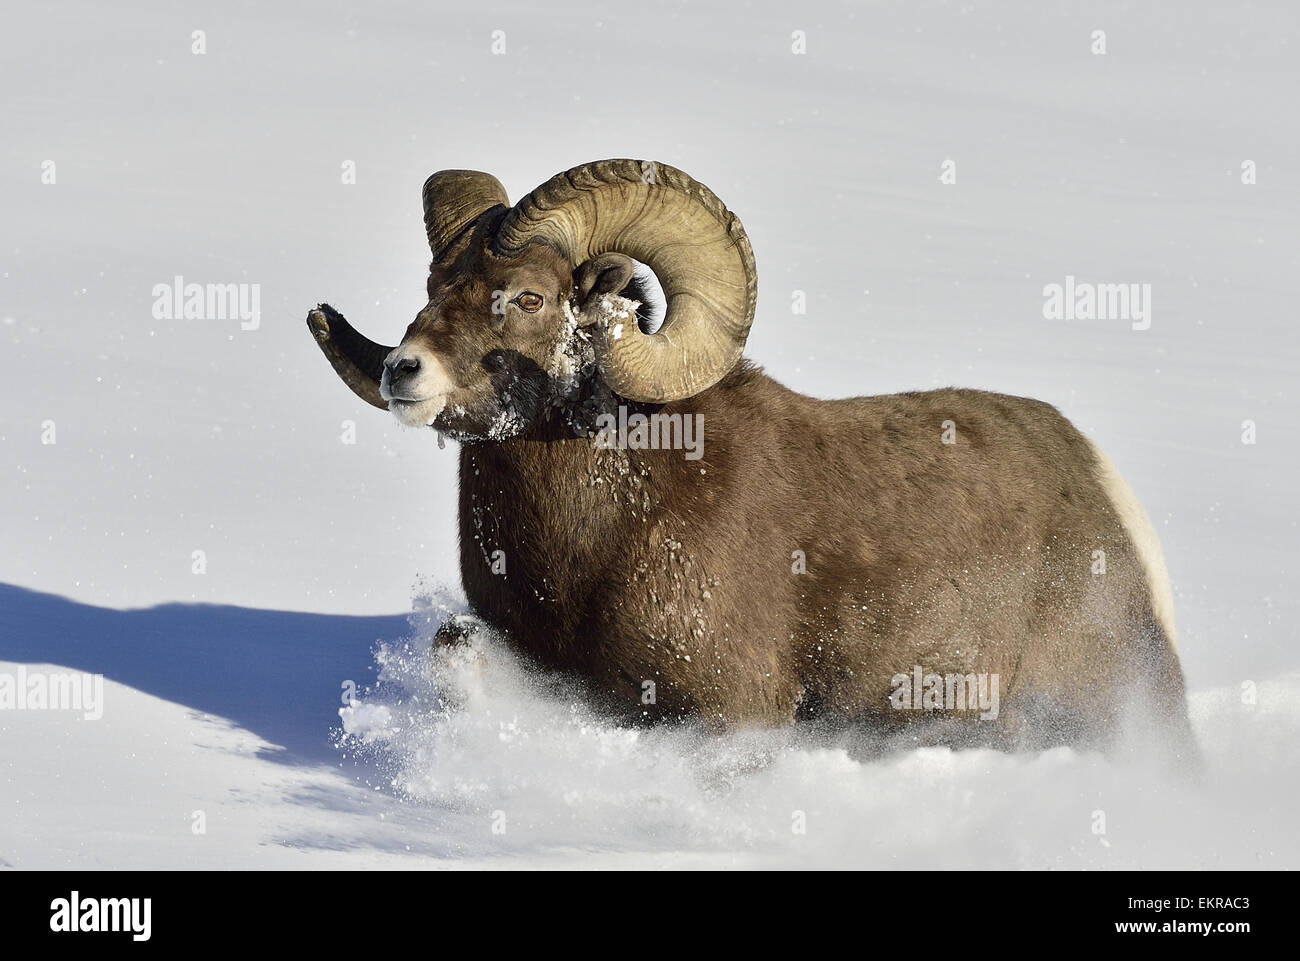 A wild rocky mountain bighorn sheep wading through the heavy snow Stock Photo